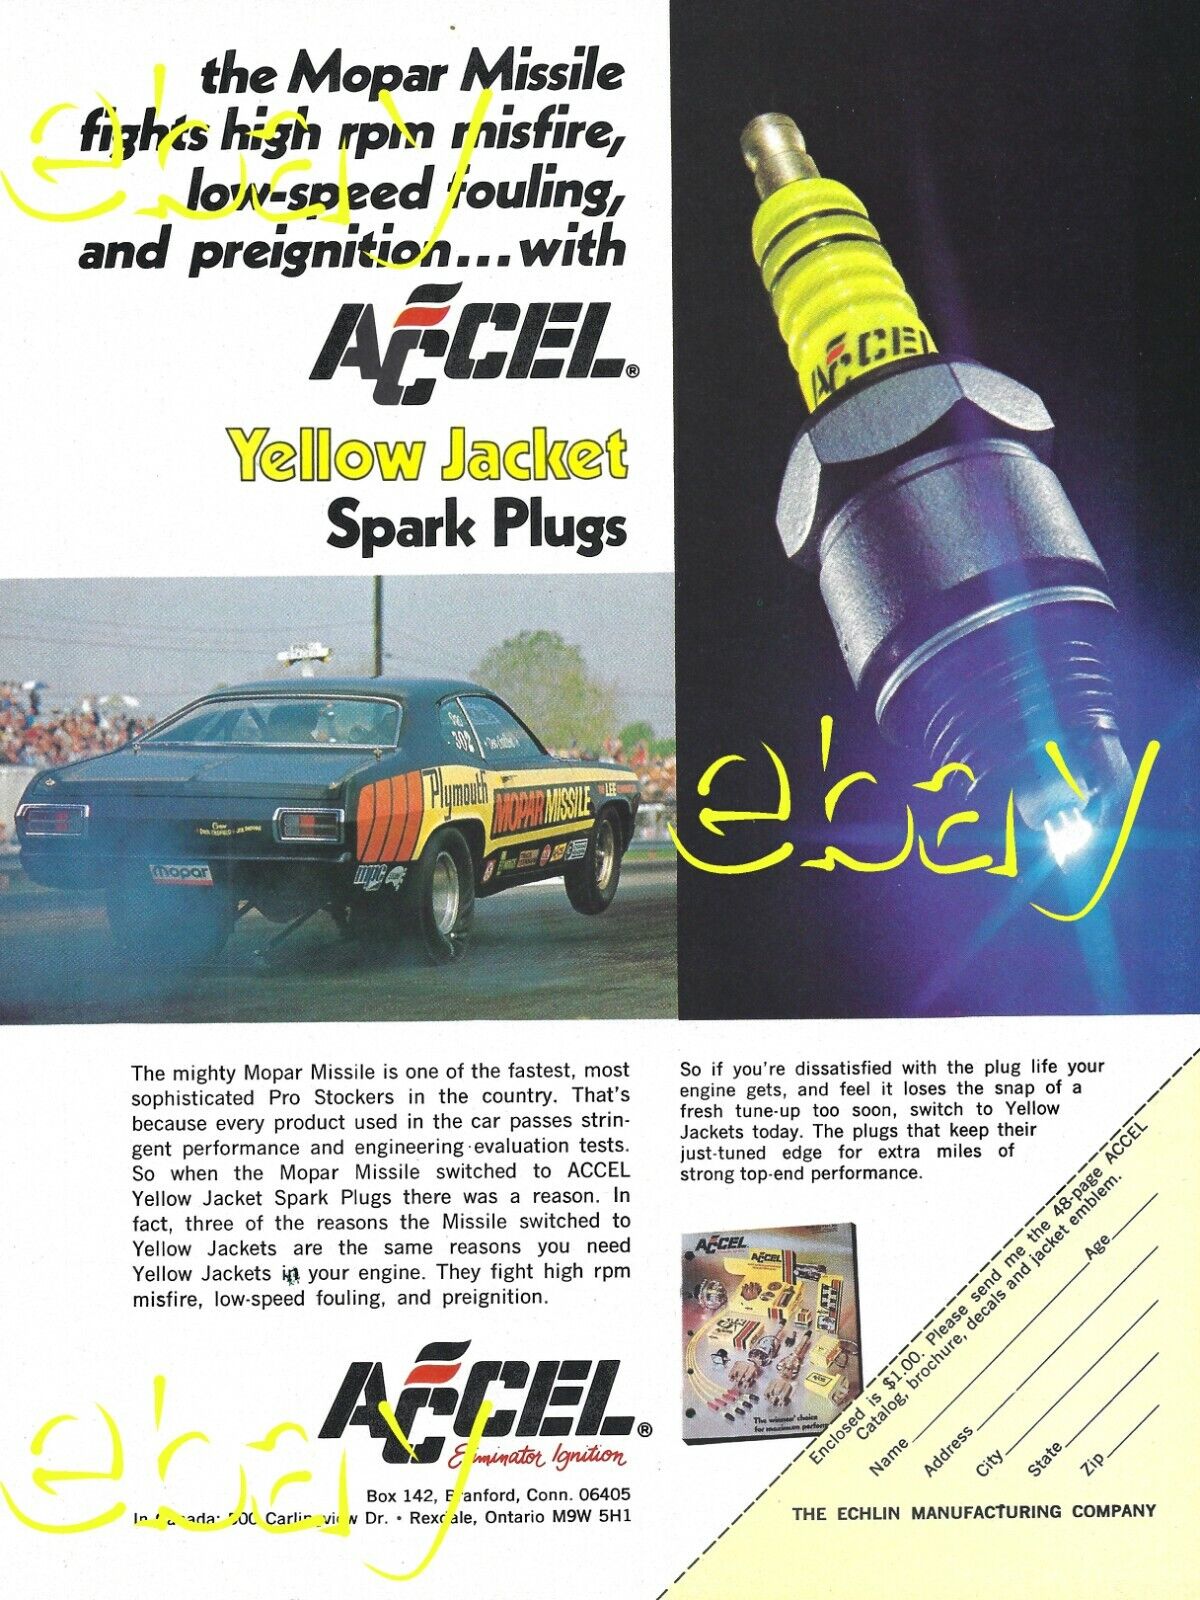 1973 Accel Spark Plug Mopar Missile Don Carlton Plymouth Duster Magazine Ad 73